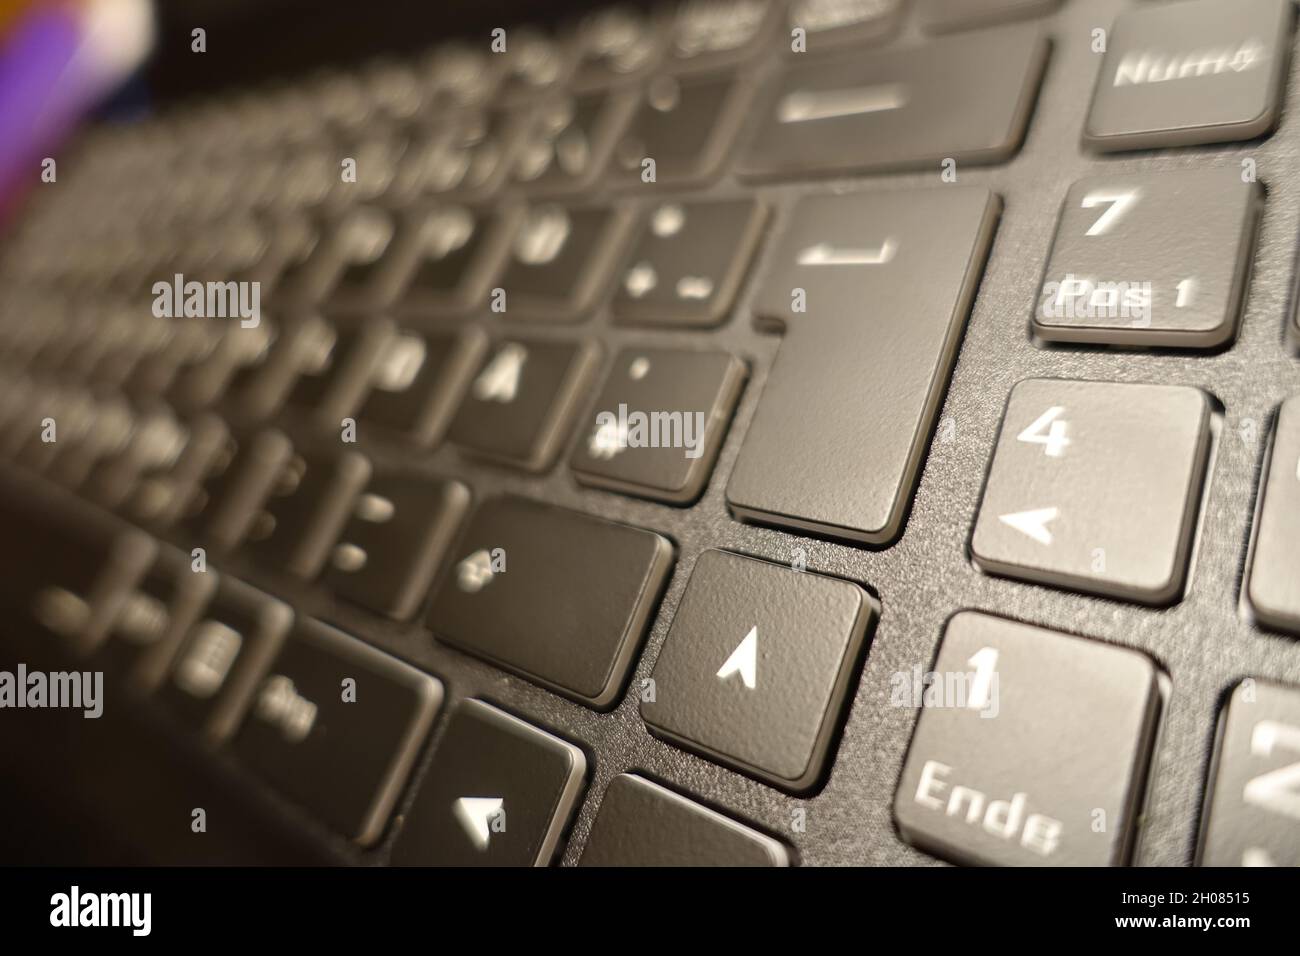 symbol image - computer keyboard close-up Stock Photo - Alamy